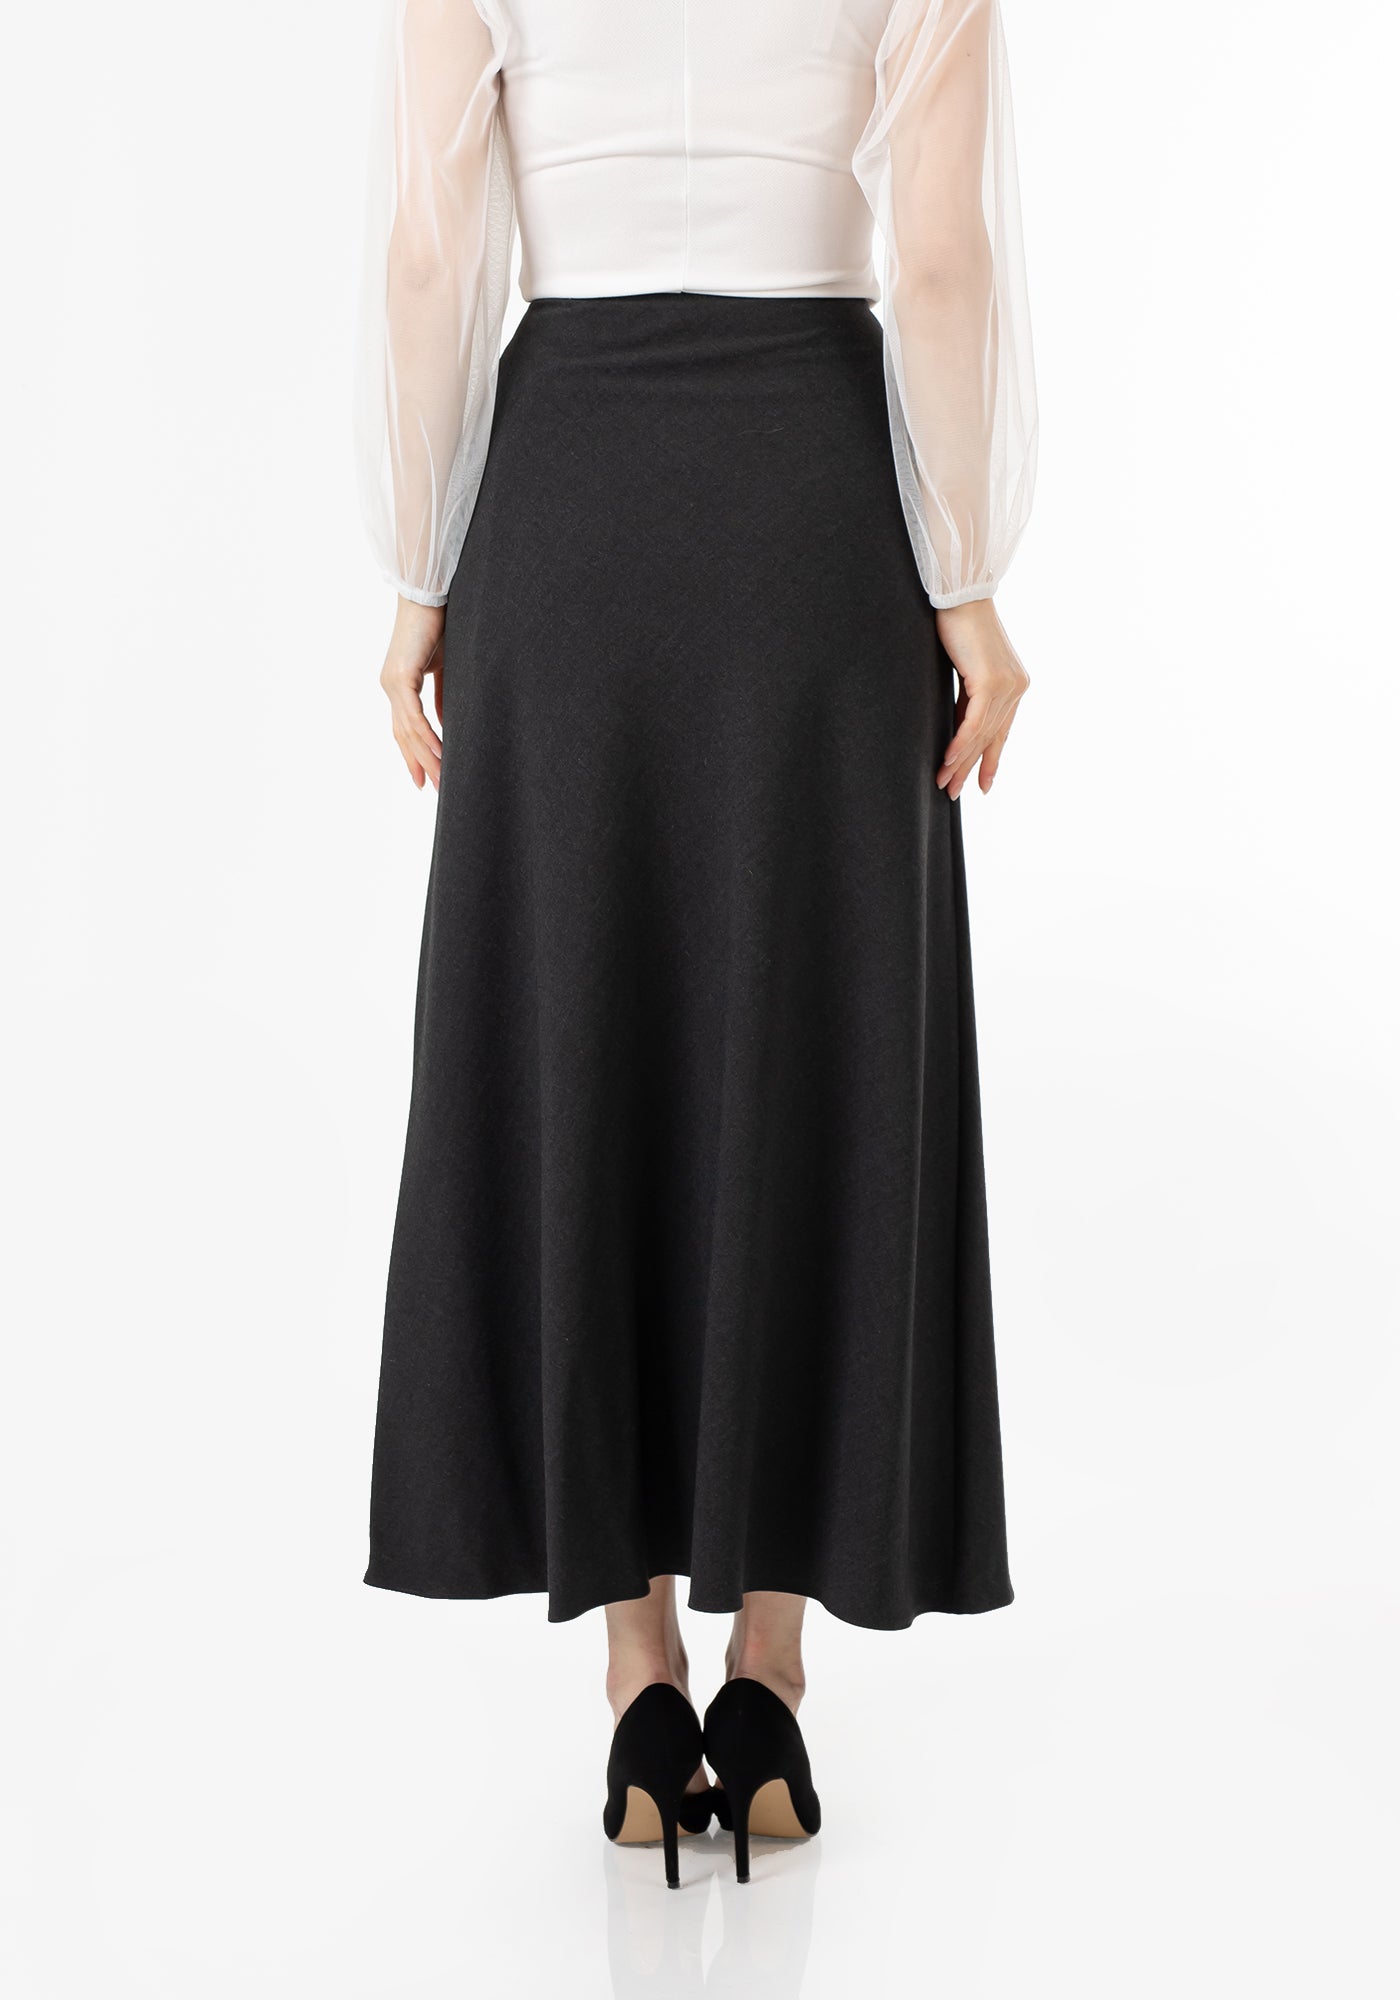 G-Line Charcoal A-Line Style Comfy Maxi Dress Skirt